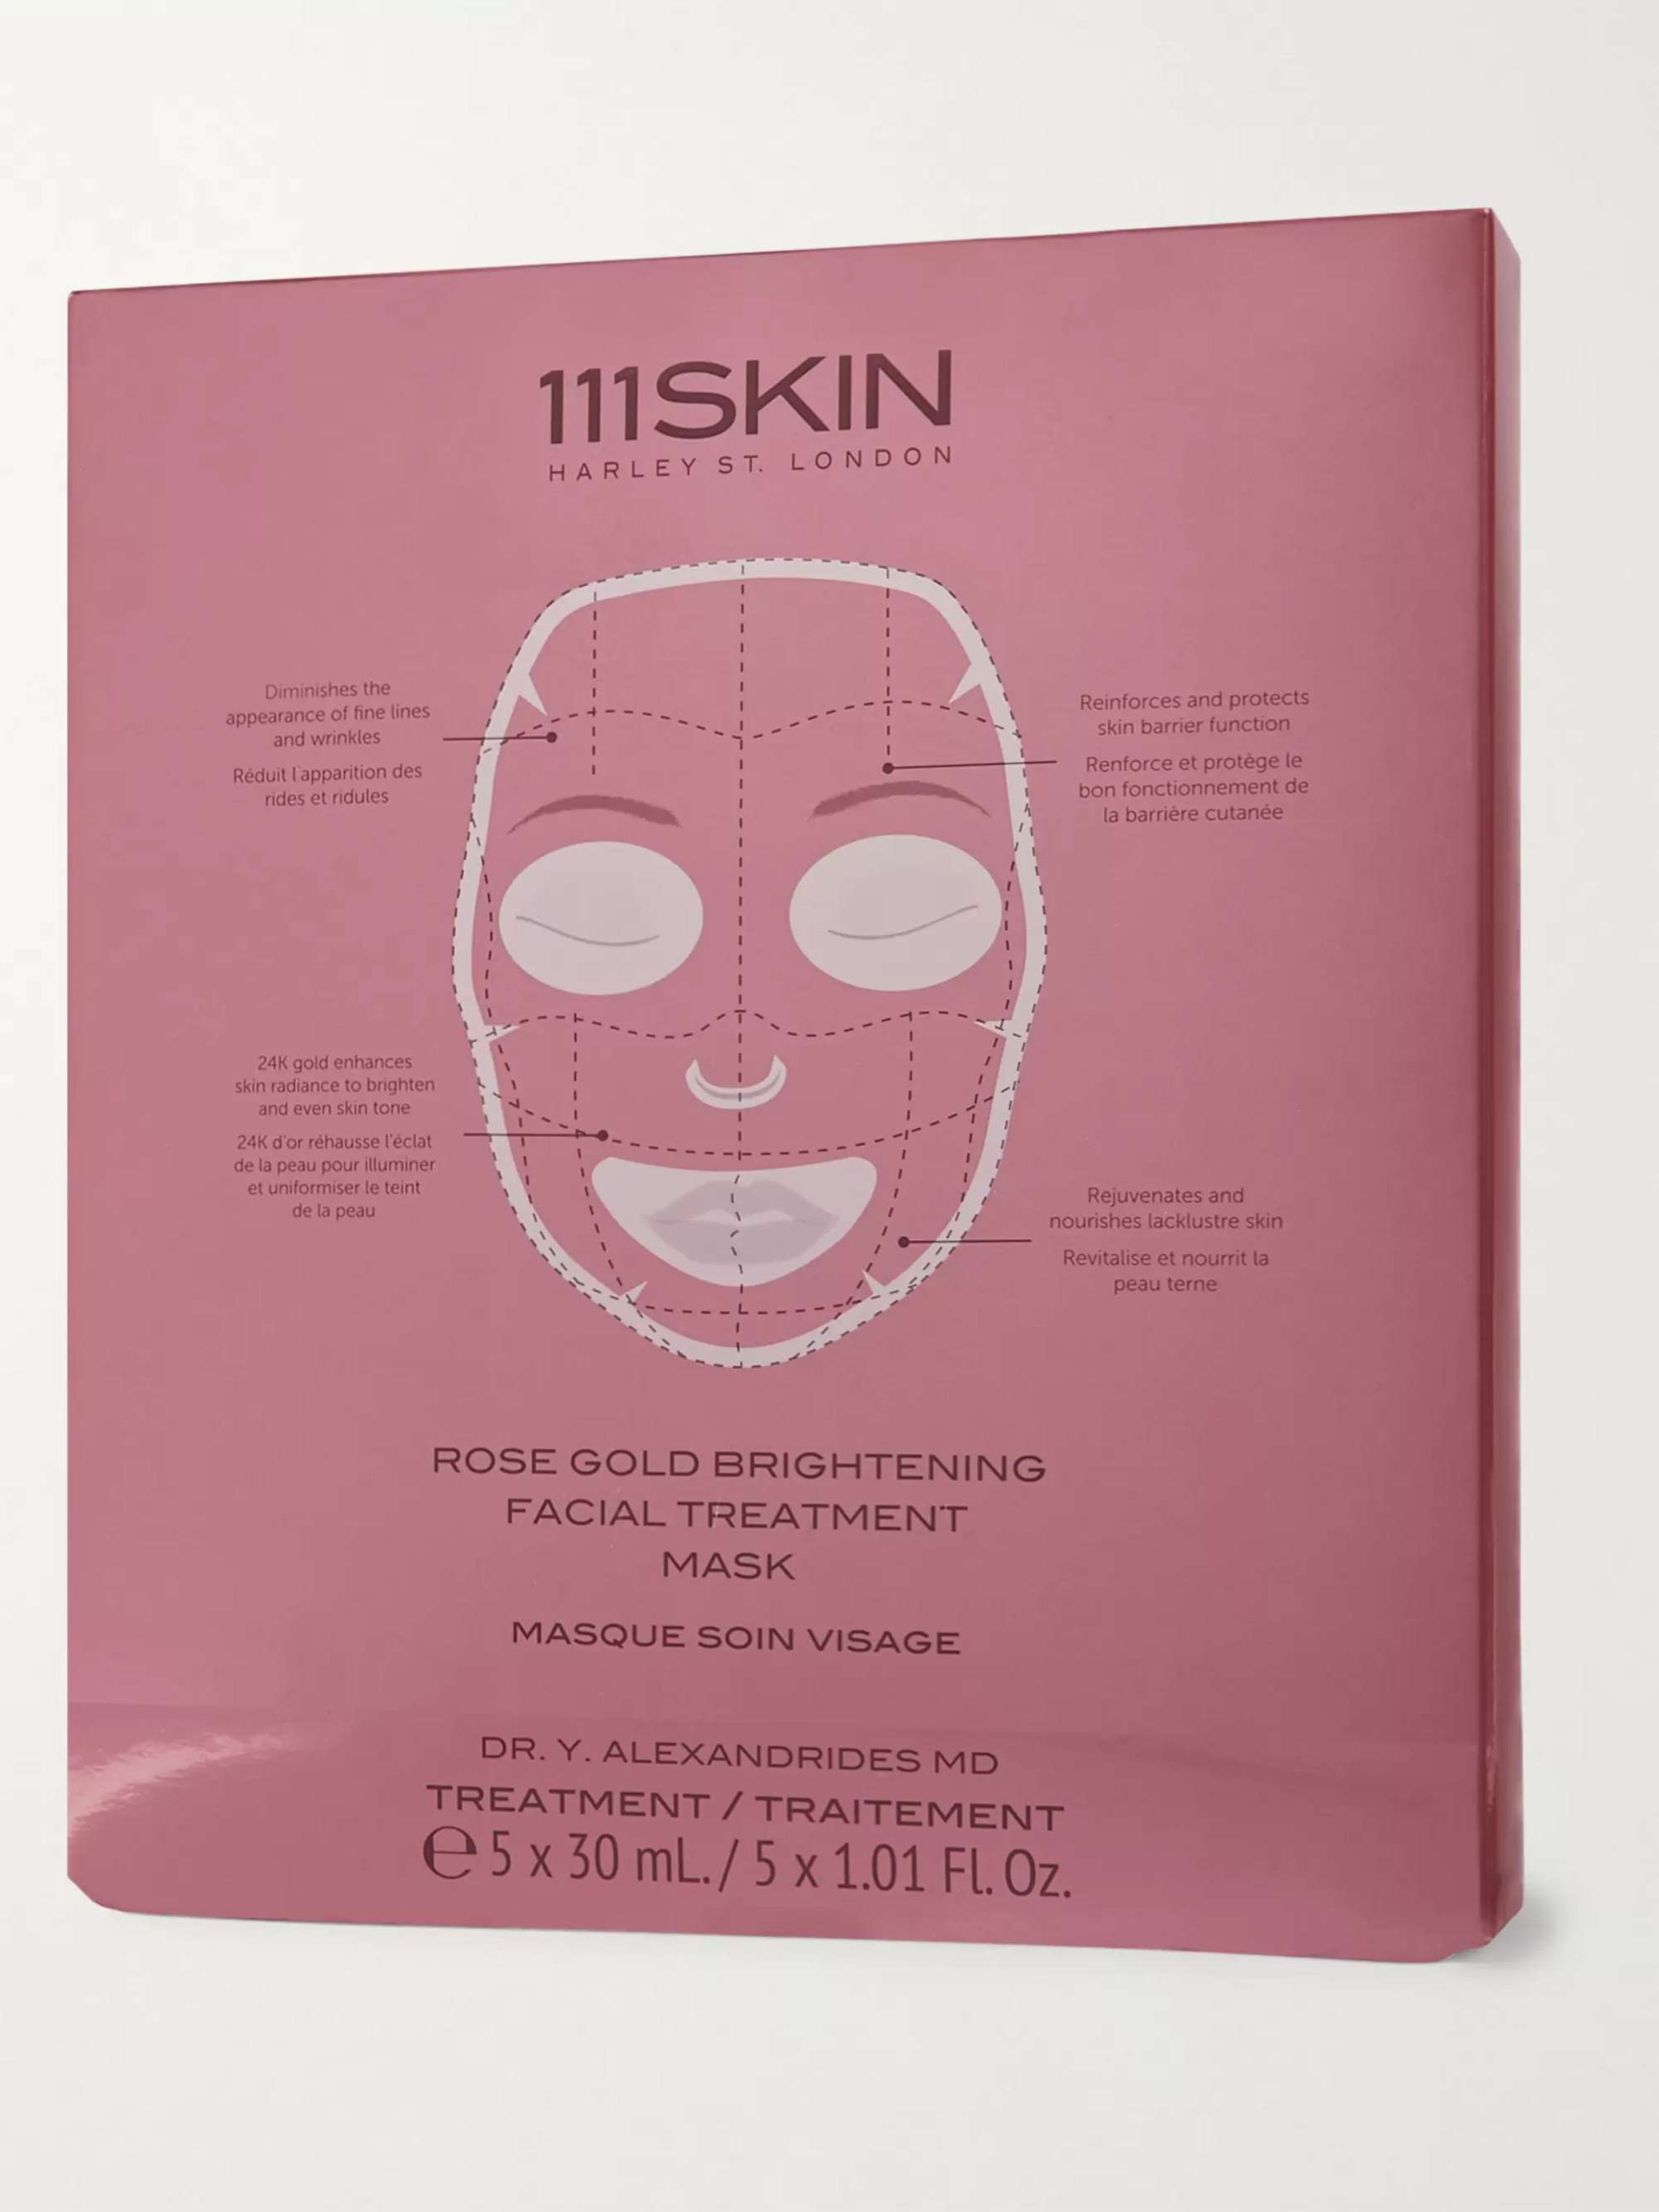 111SKIN Rose Gold Brightening Facial Treatment Mask, 5 x 30ml